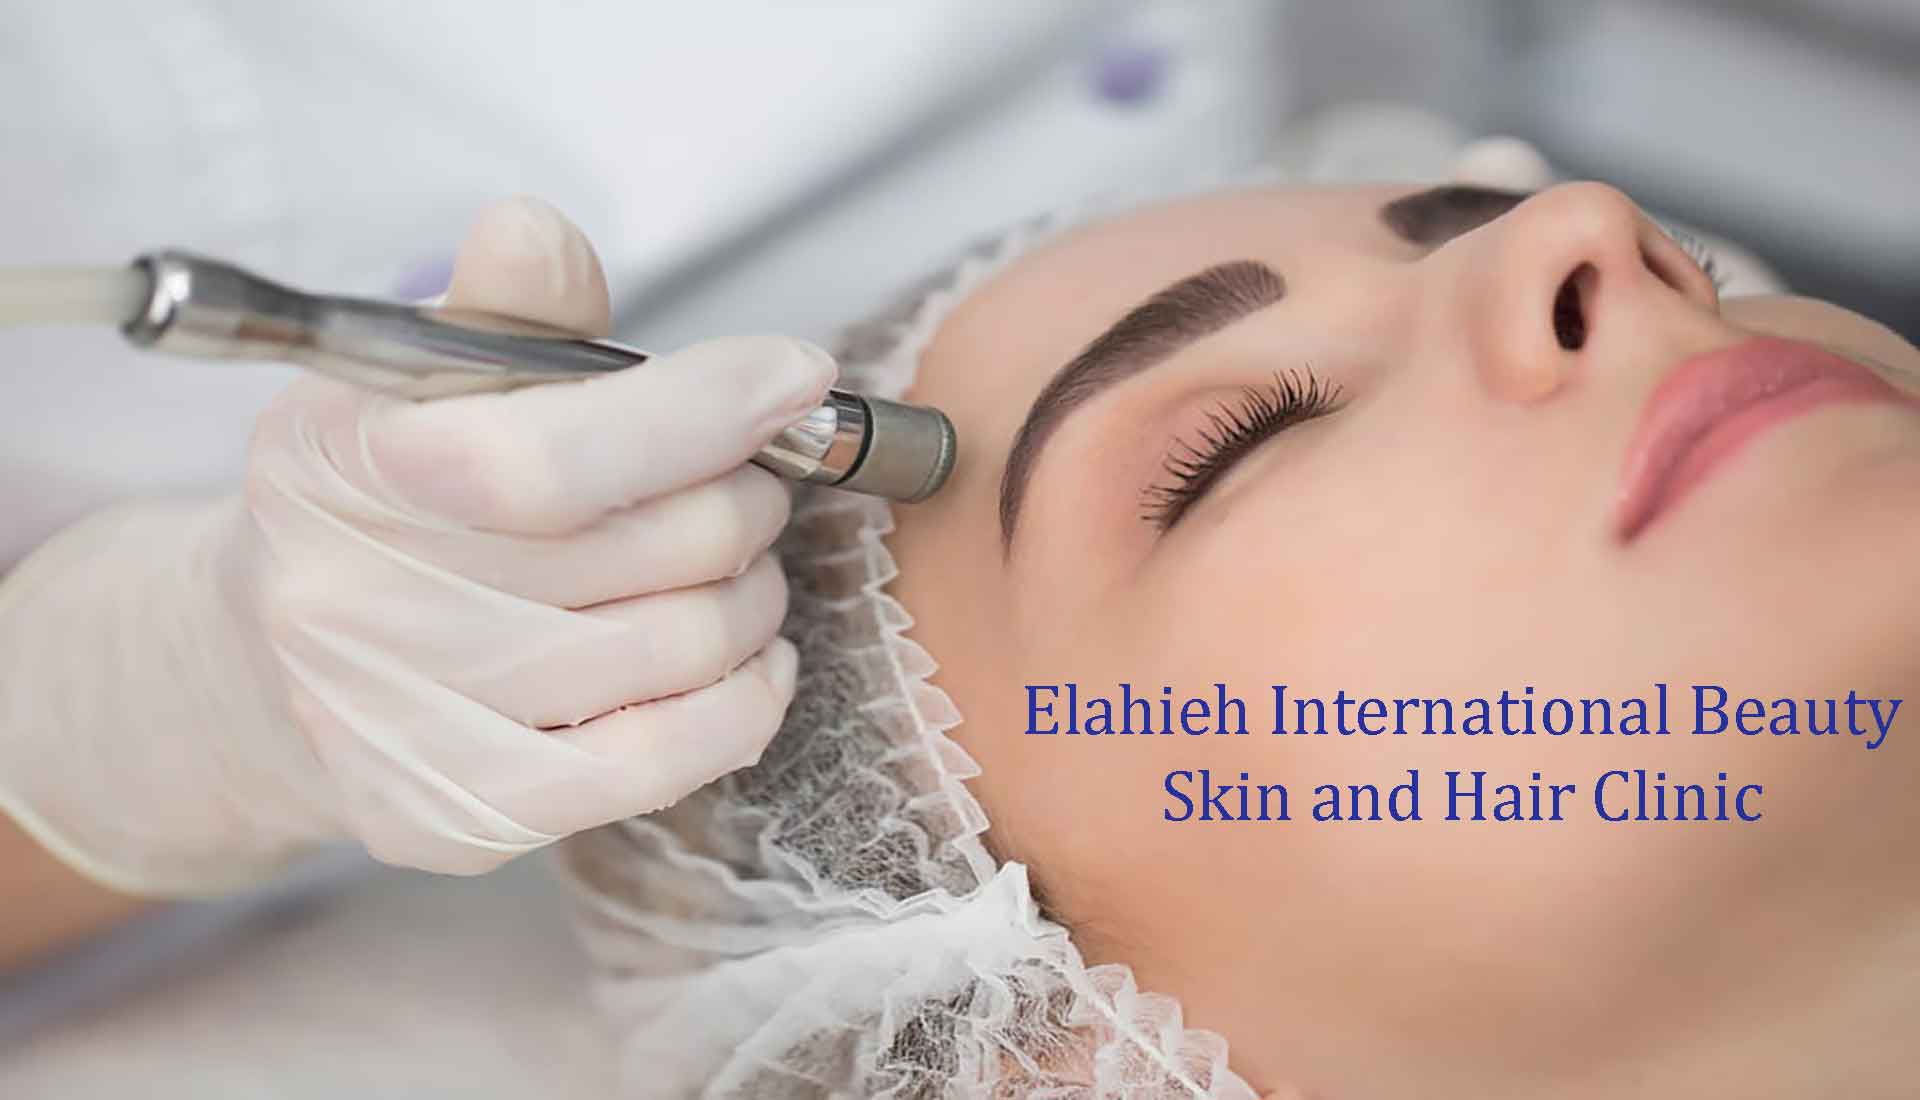 Elahieh International Beauty Skin and Hair Clinic